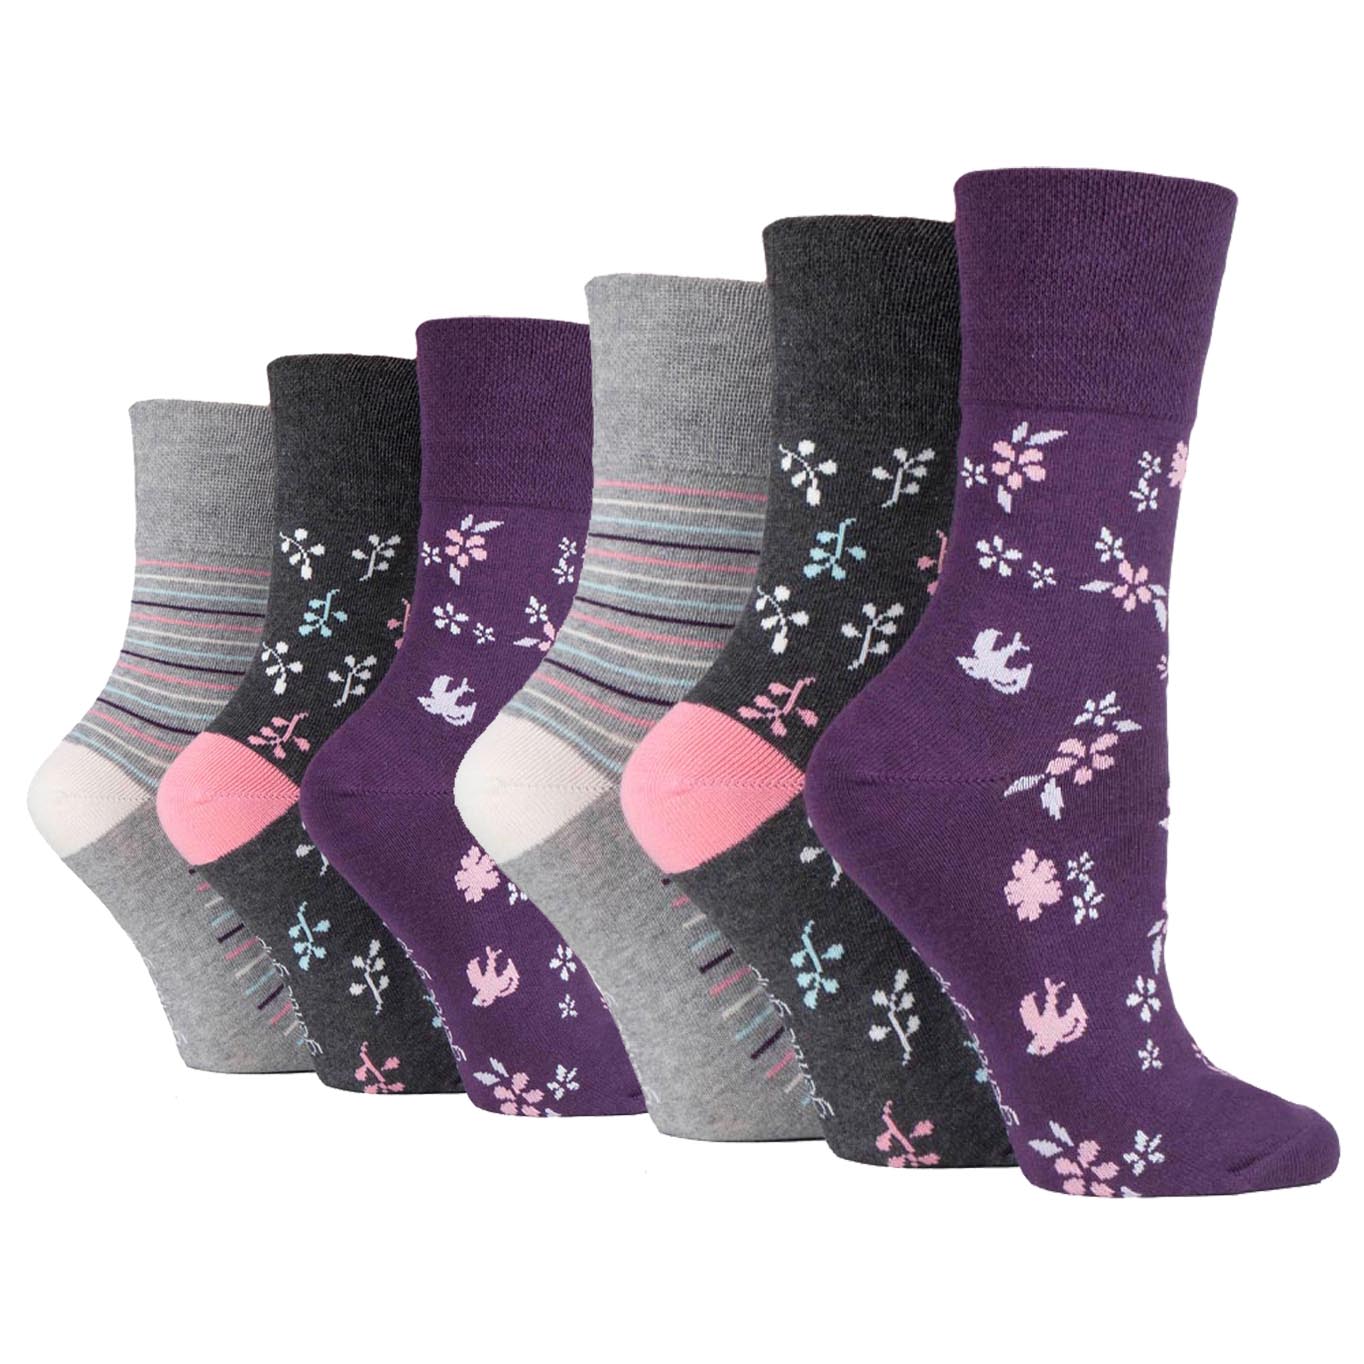 6 Pairs Ladies Gentle Grip Cotton Socks Romance Purple/Grey